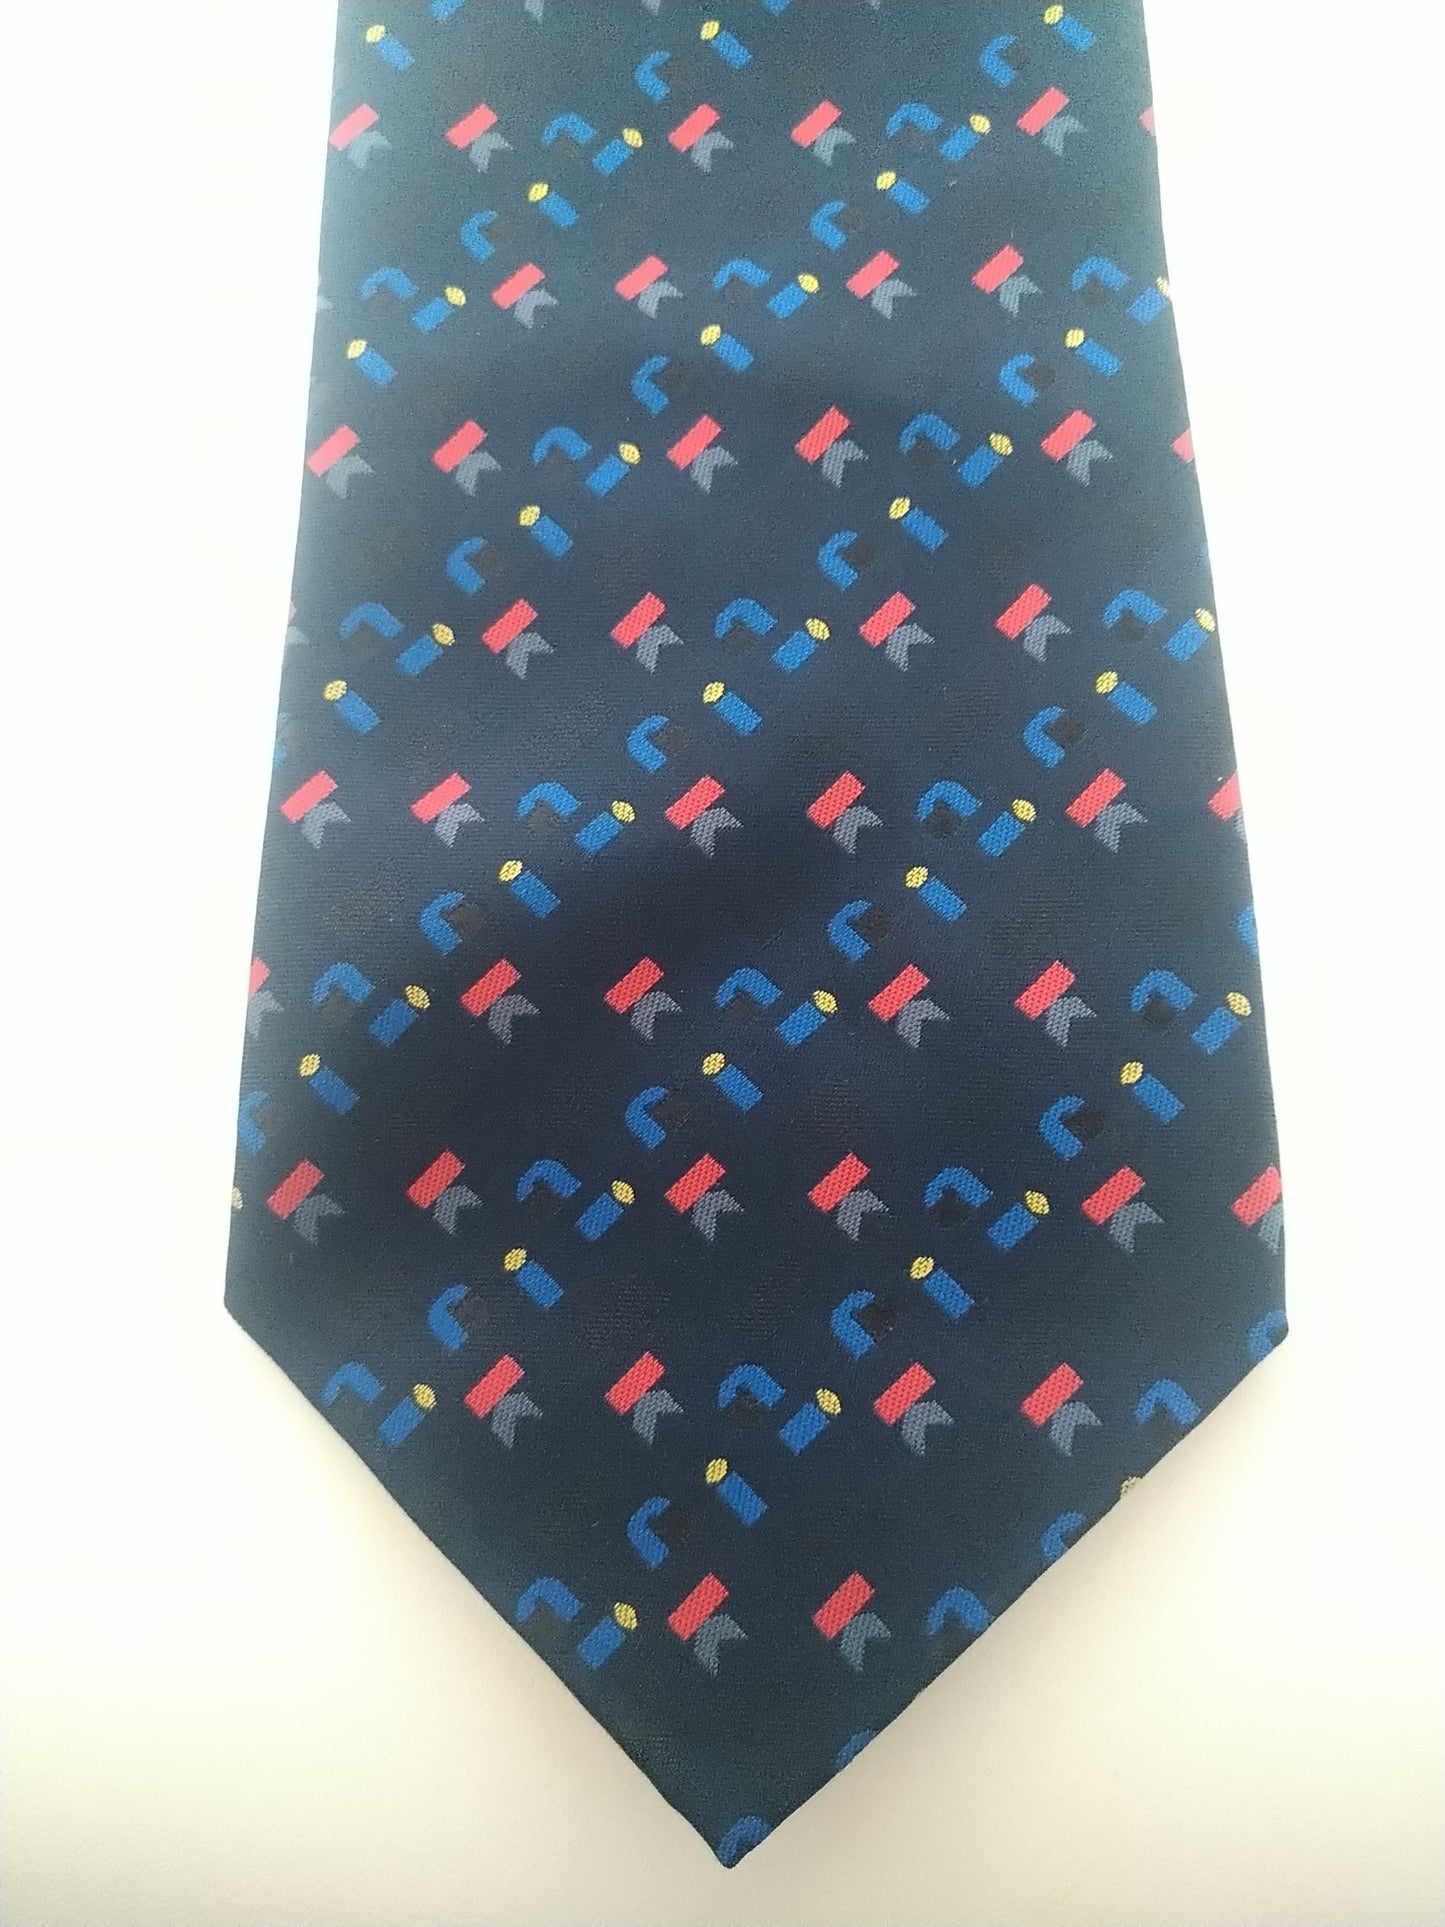 Kiwa stropdas. Blauw rood motief.